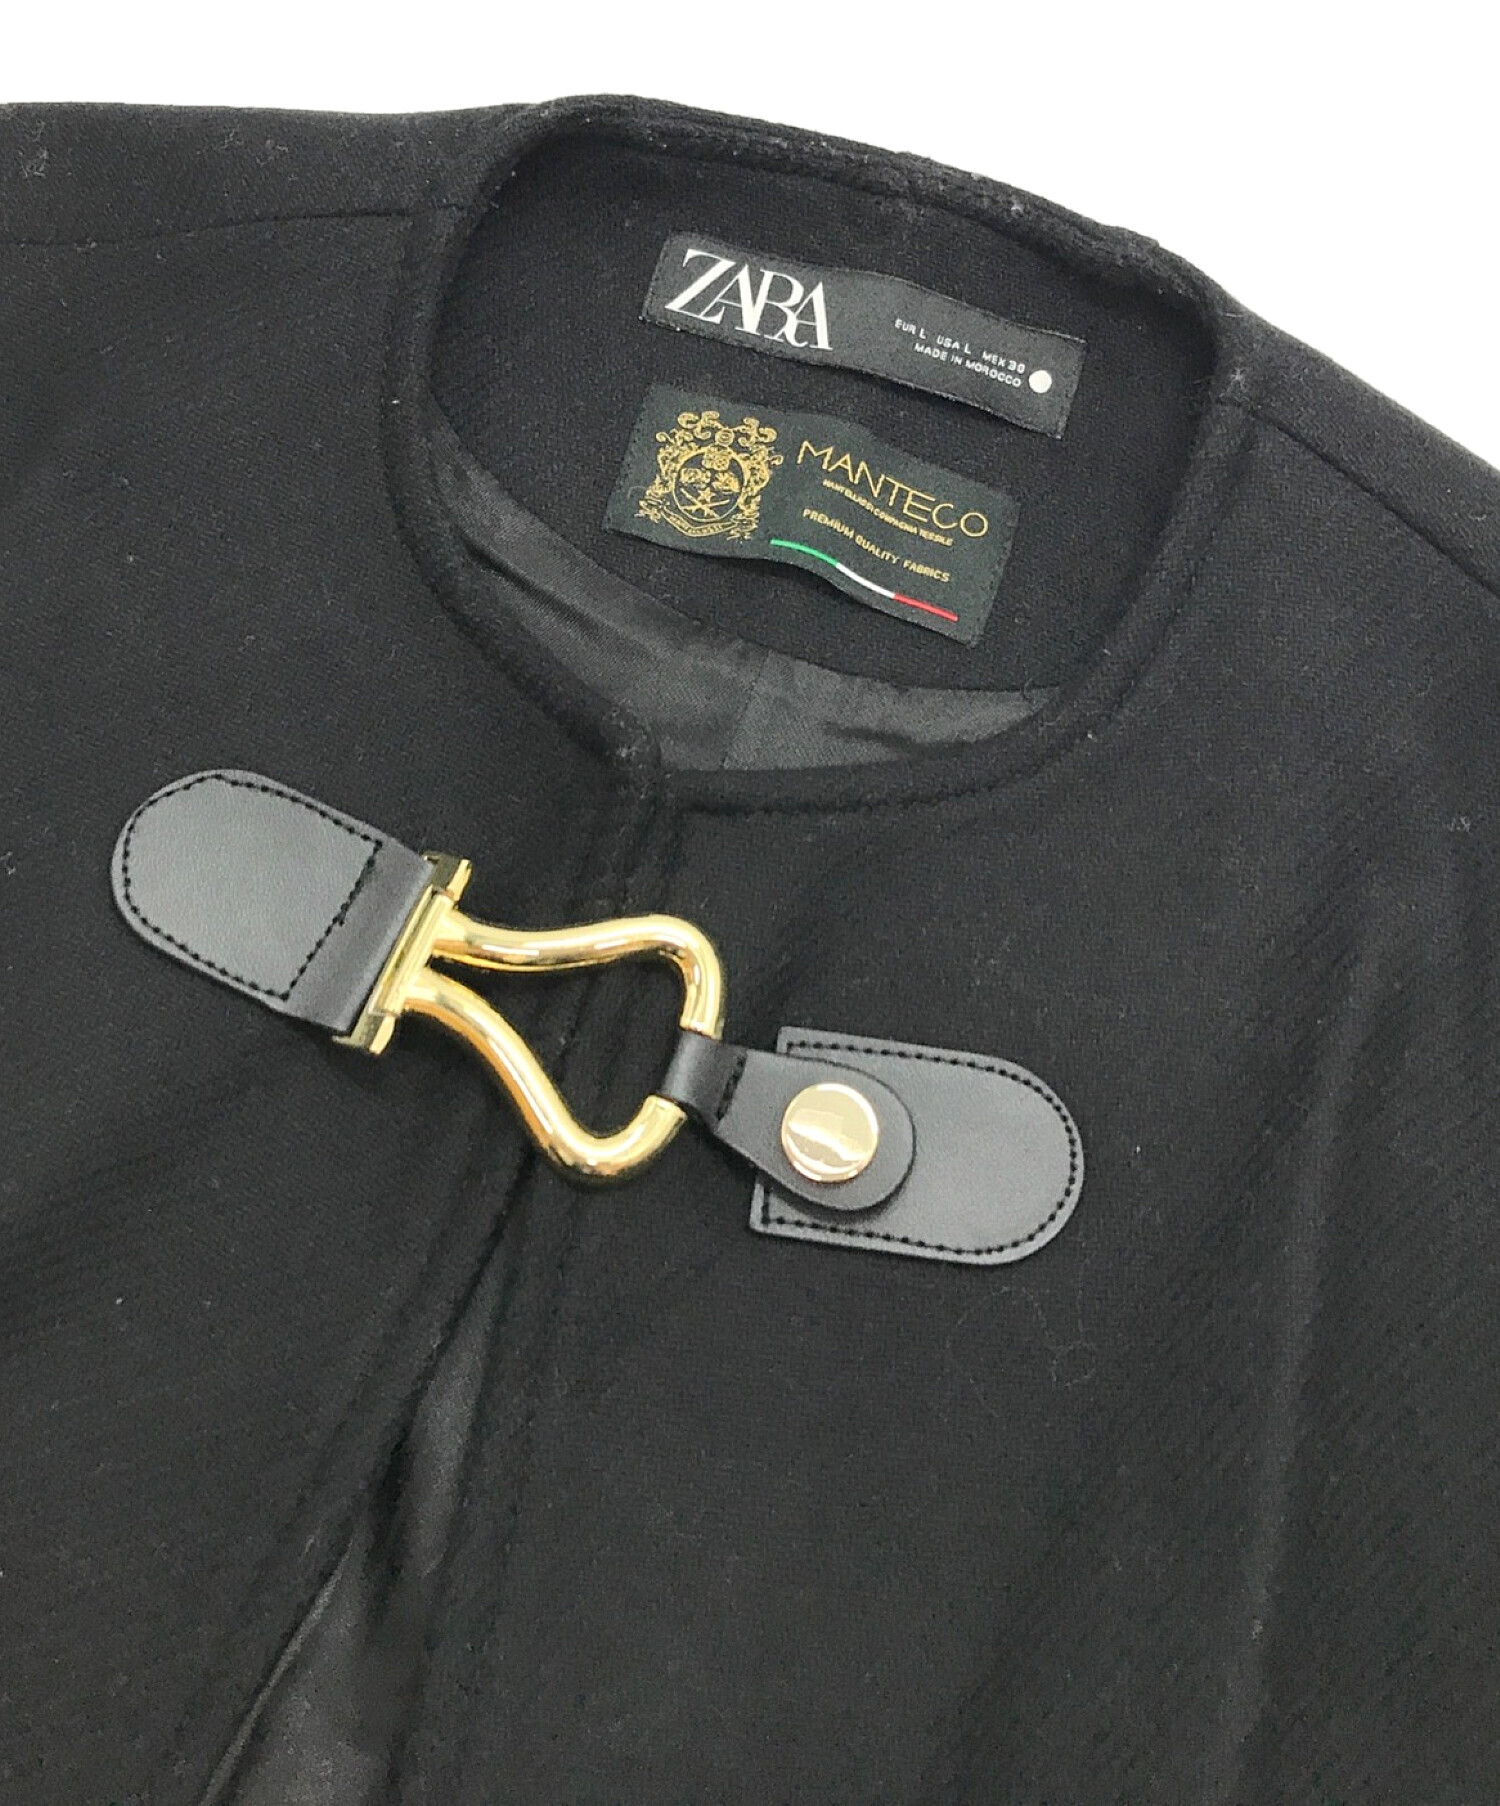 ZARA (ザラ) バックル付ケープコート ブラック サイズ:L